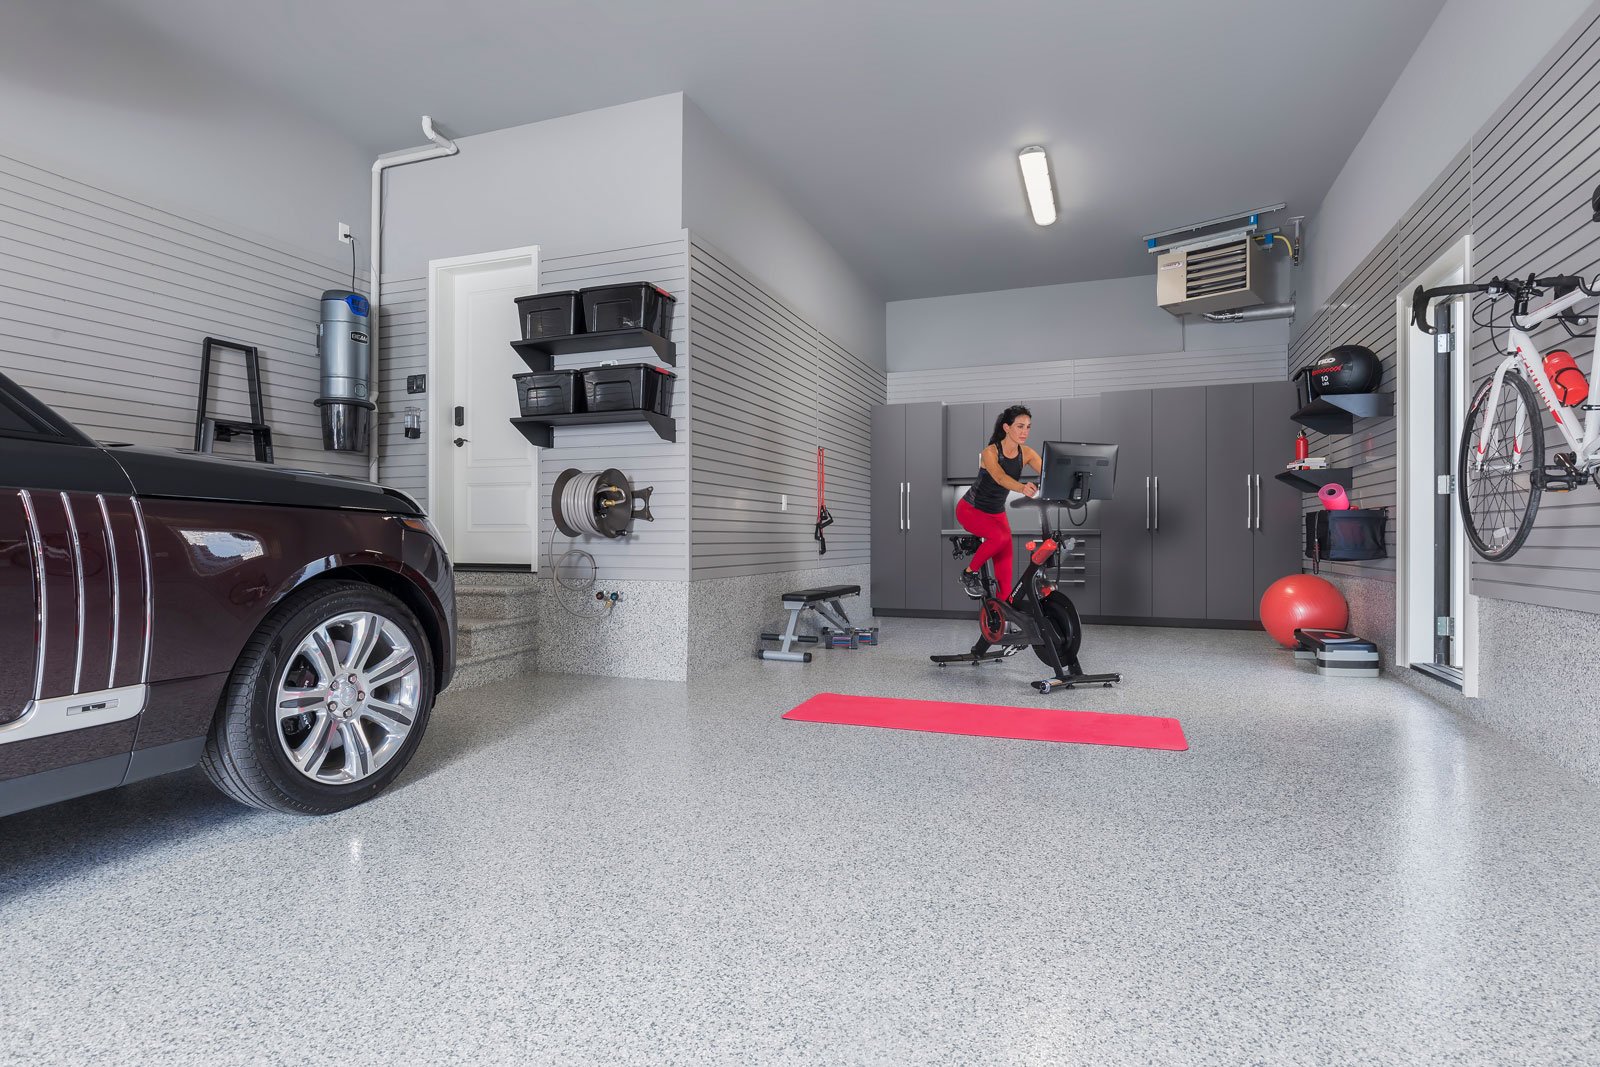 xwoman-exercise-bike-fitness-room-garage.jpg.pagespeed.ic.s5WG8gV5Vt